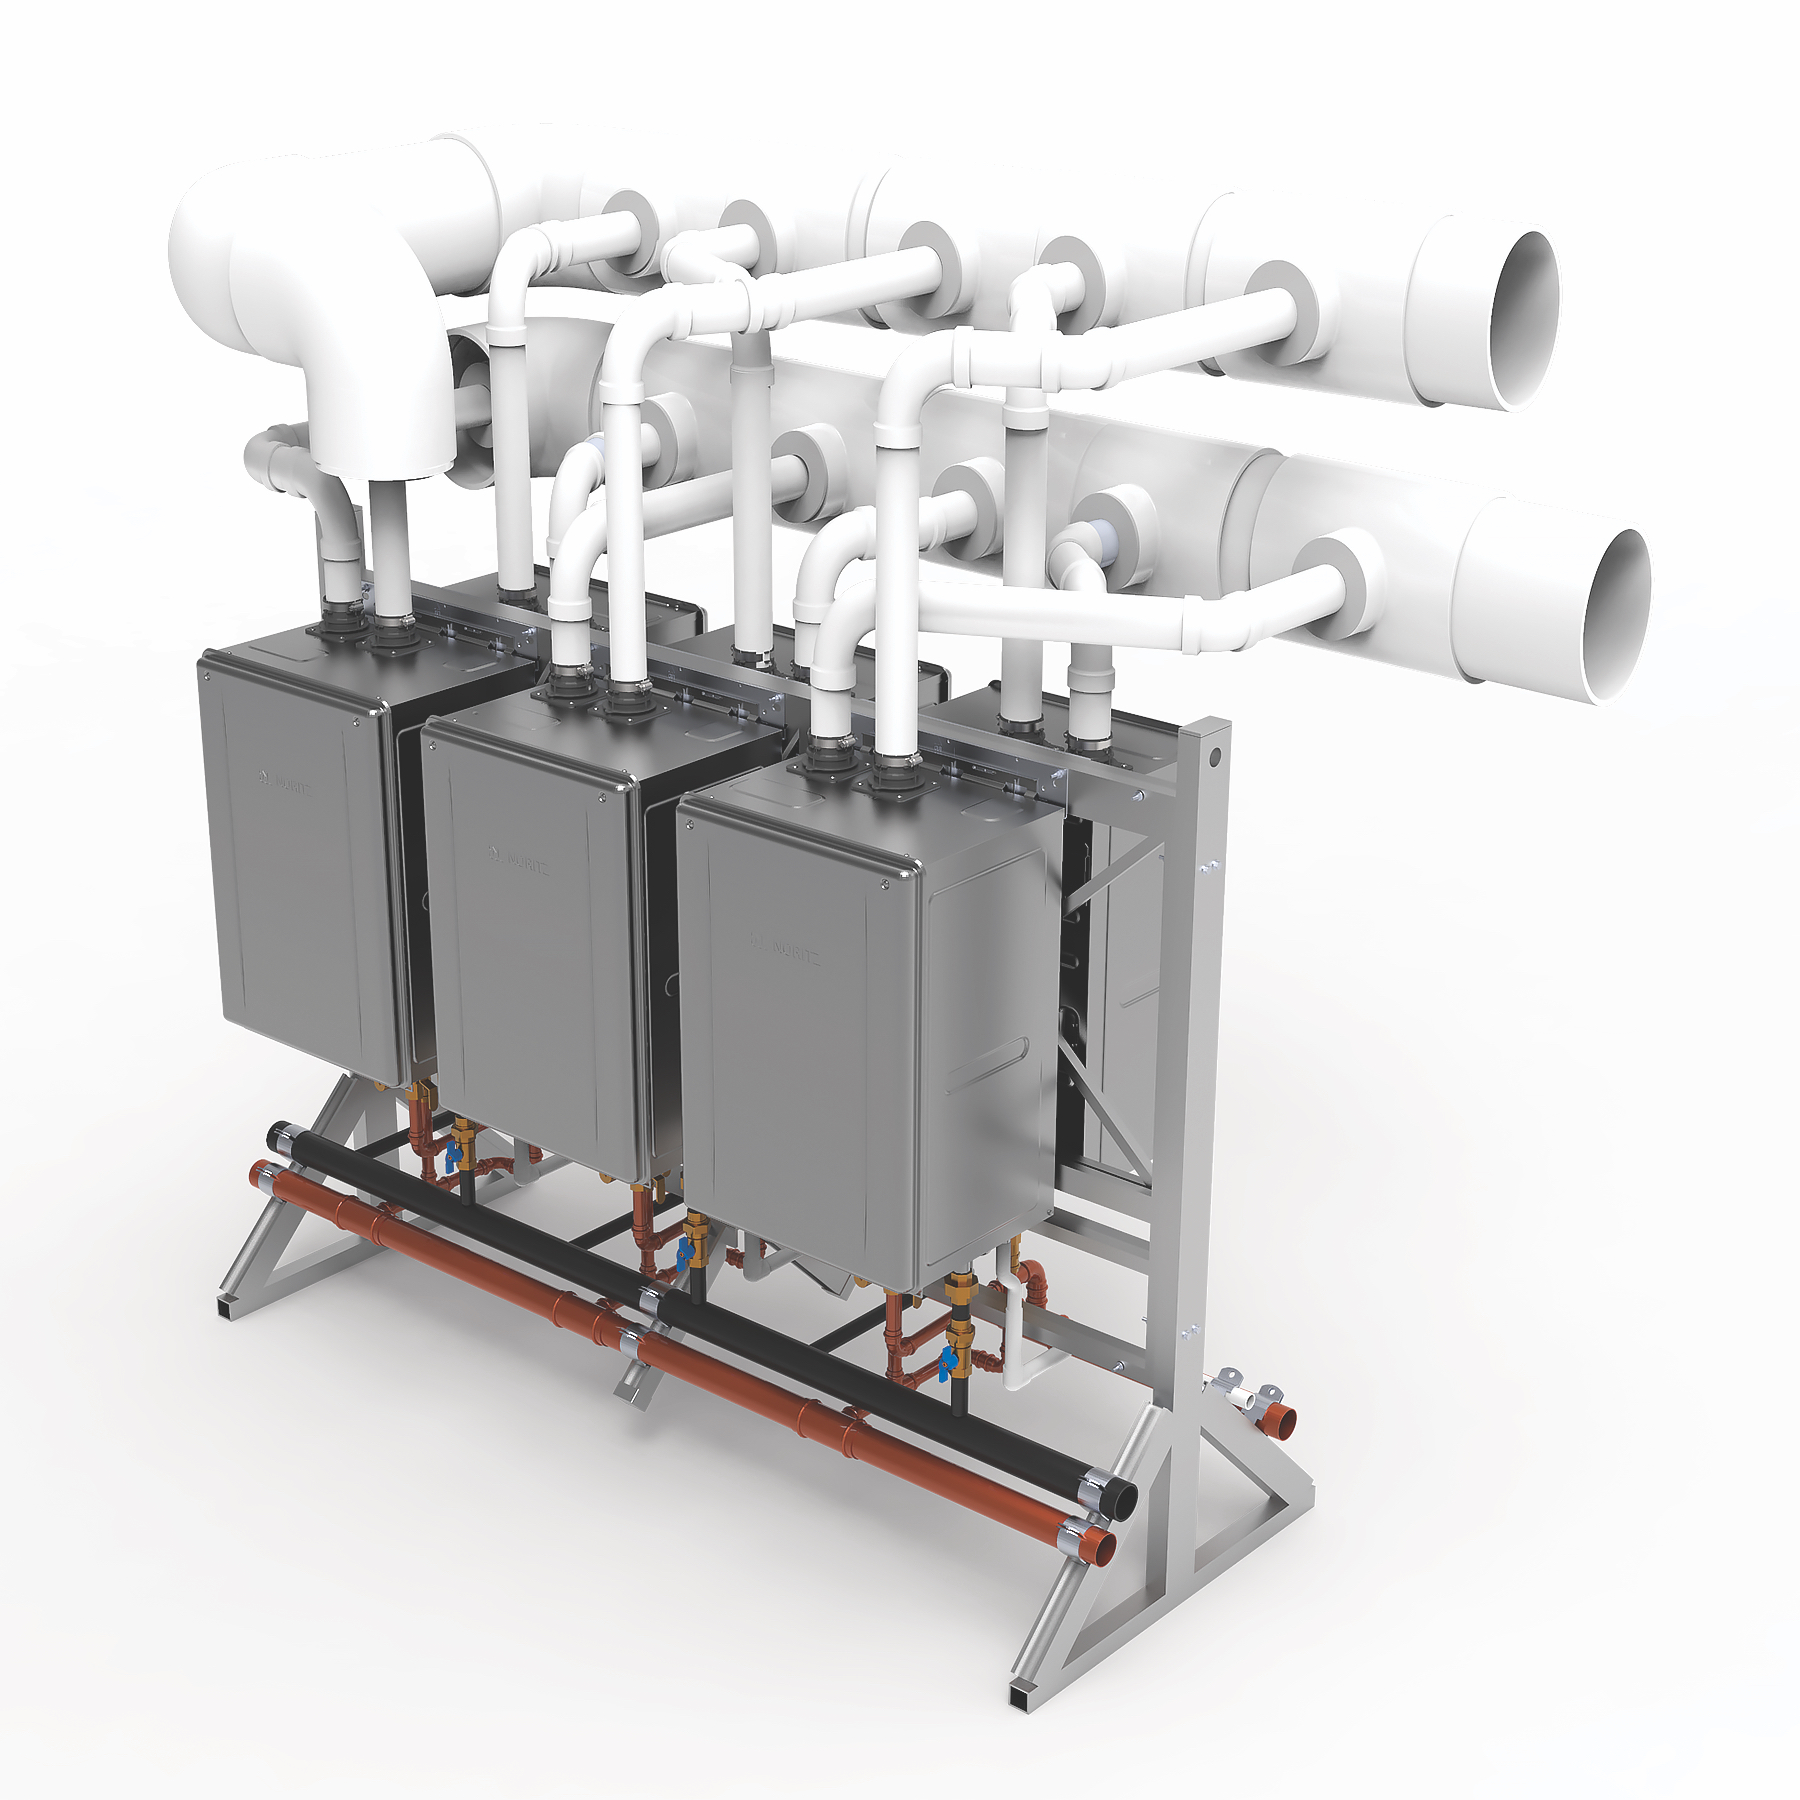 12 factors to consider in evaluating tankless water heaters Navien 